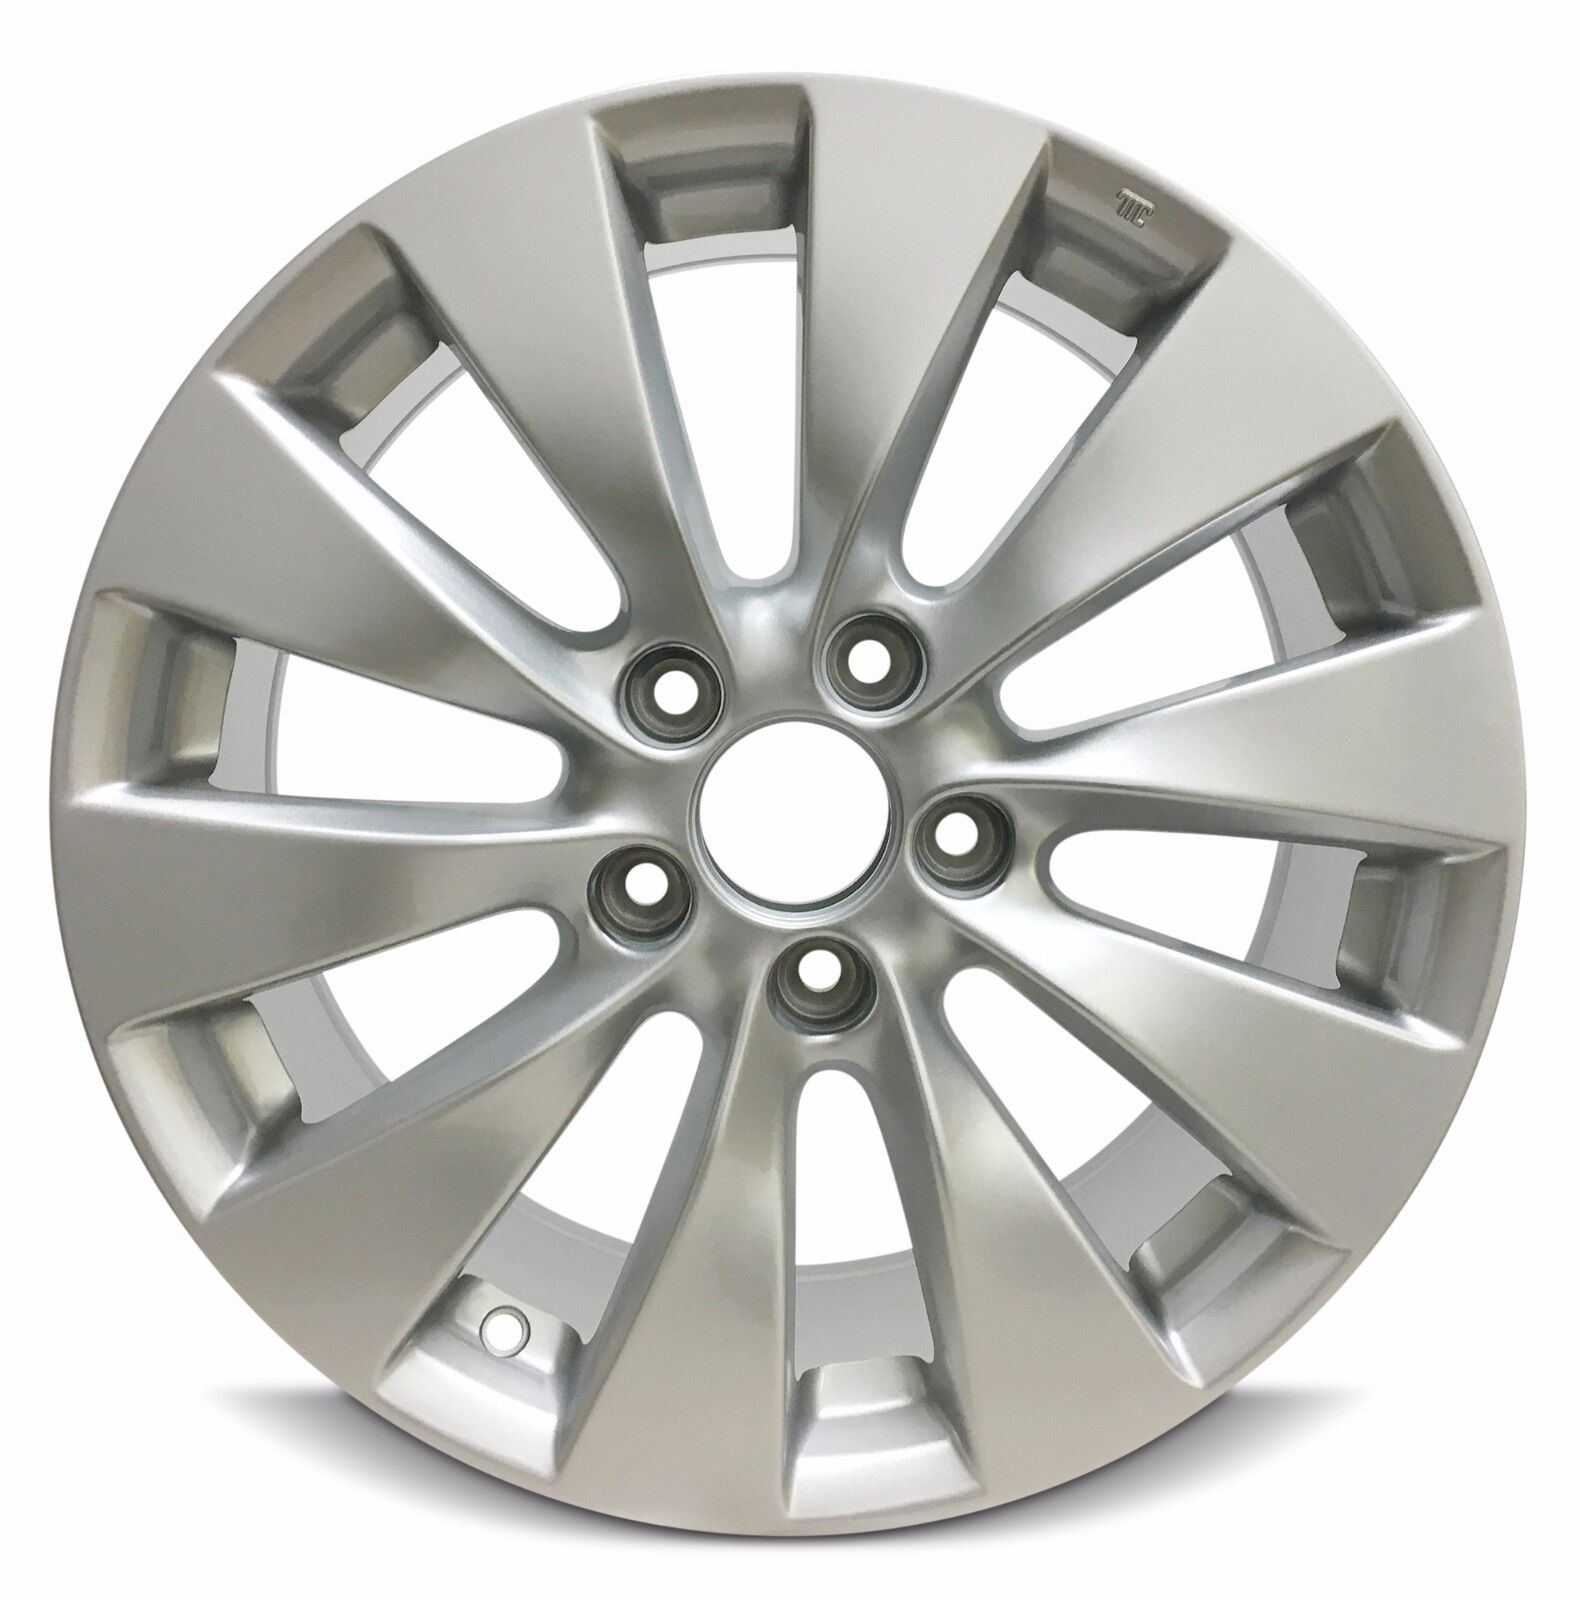 New Wheel For 2013-2015 Honda Accord 17 Inch Silver Alloy Rim